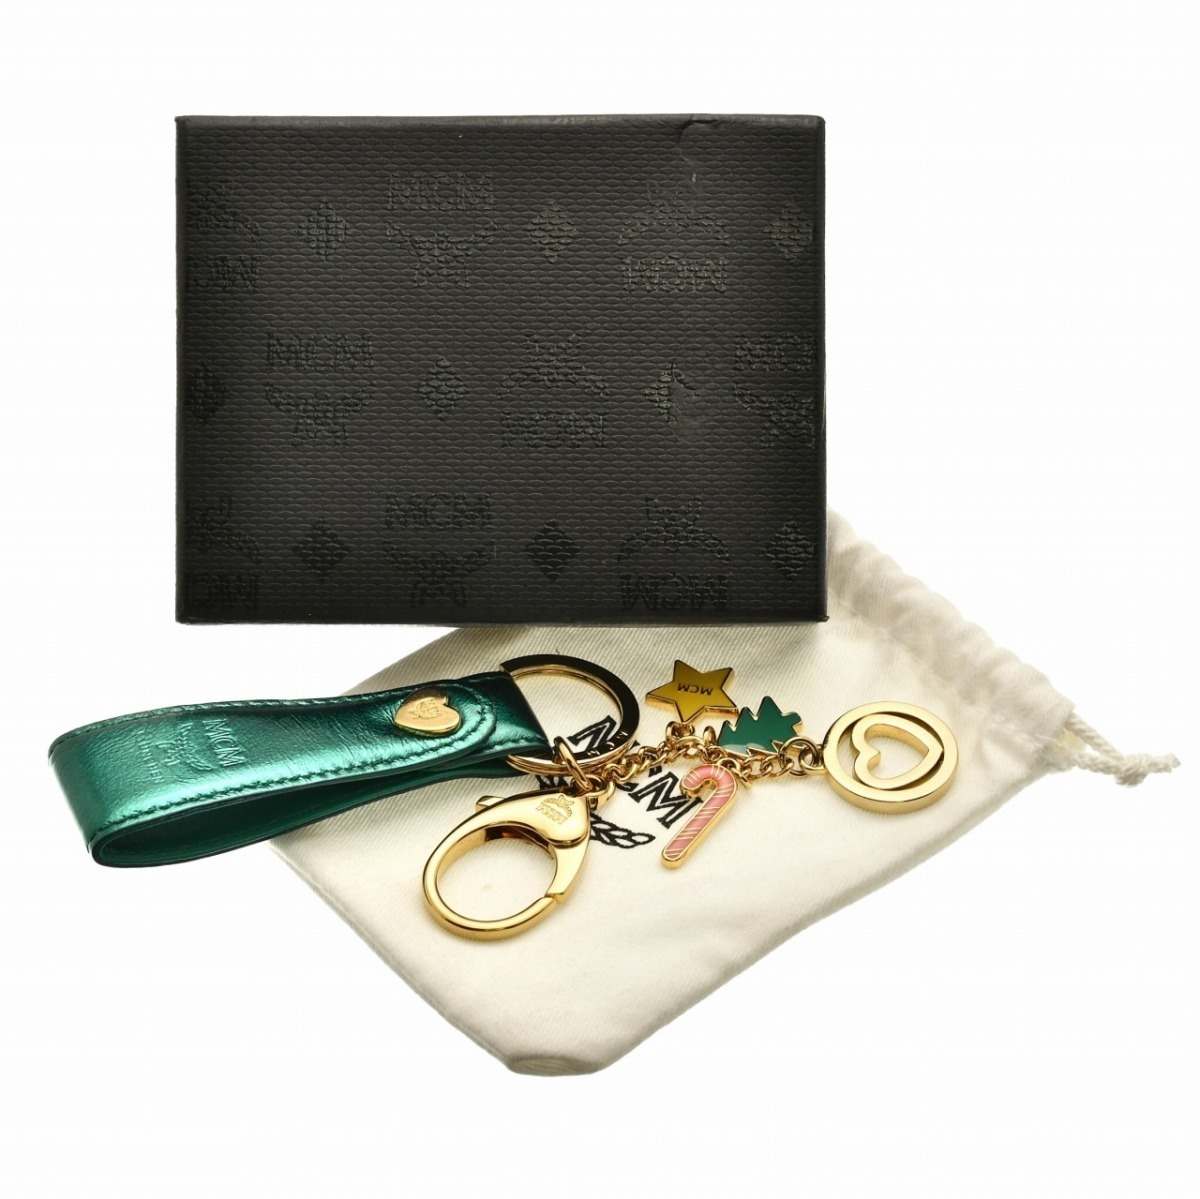 827 MCM M si- M emerald green key ring Heart Starts Lee key holder bag charm strap turquoise free shipping 